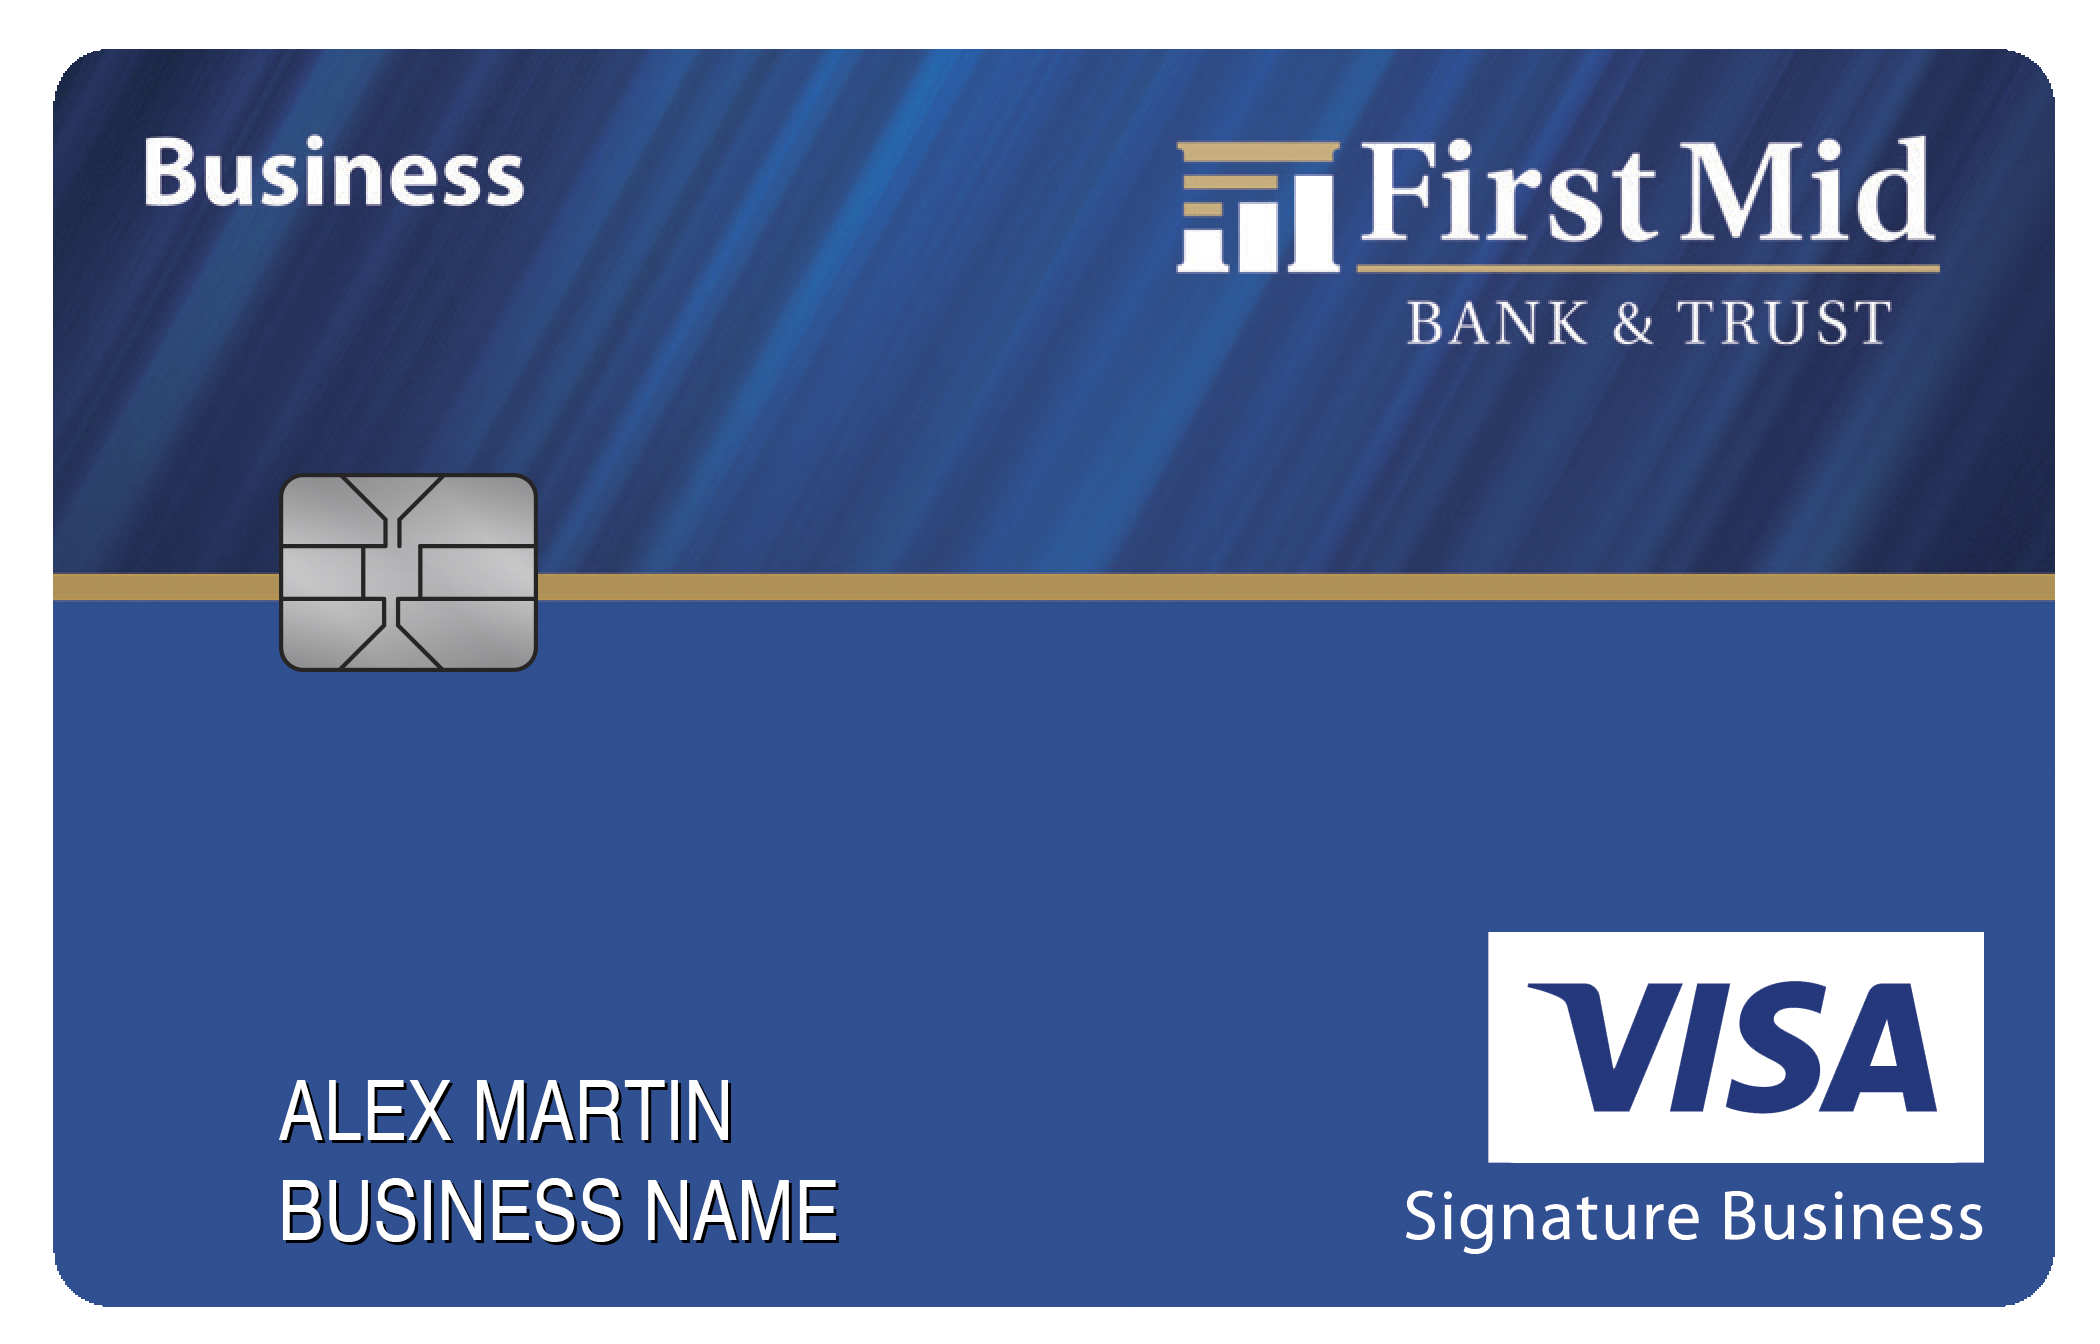 First Mid Bank & Trust Smart Business Rewards Card